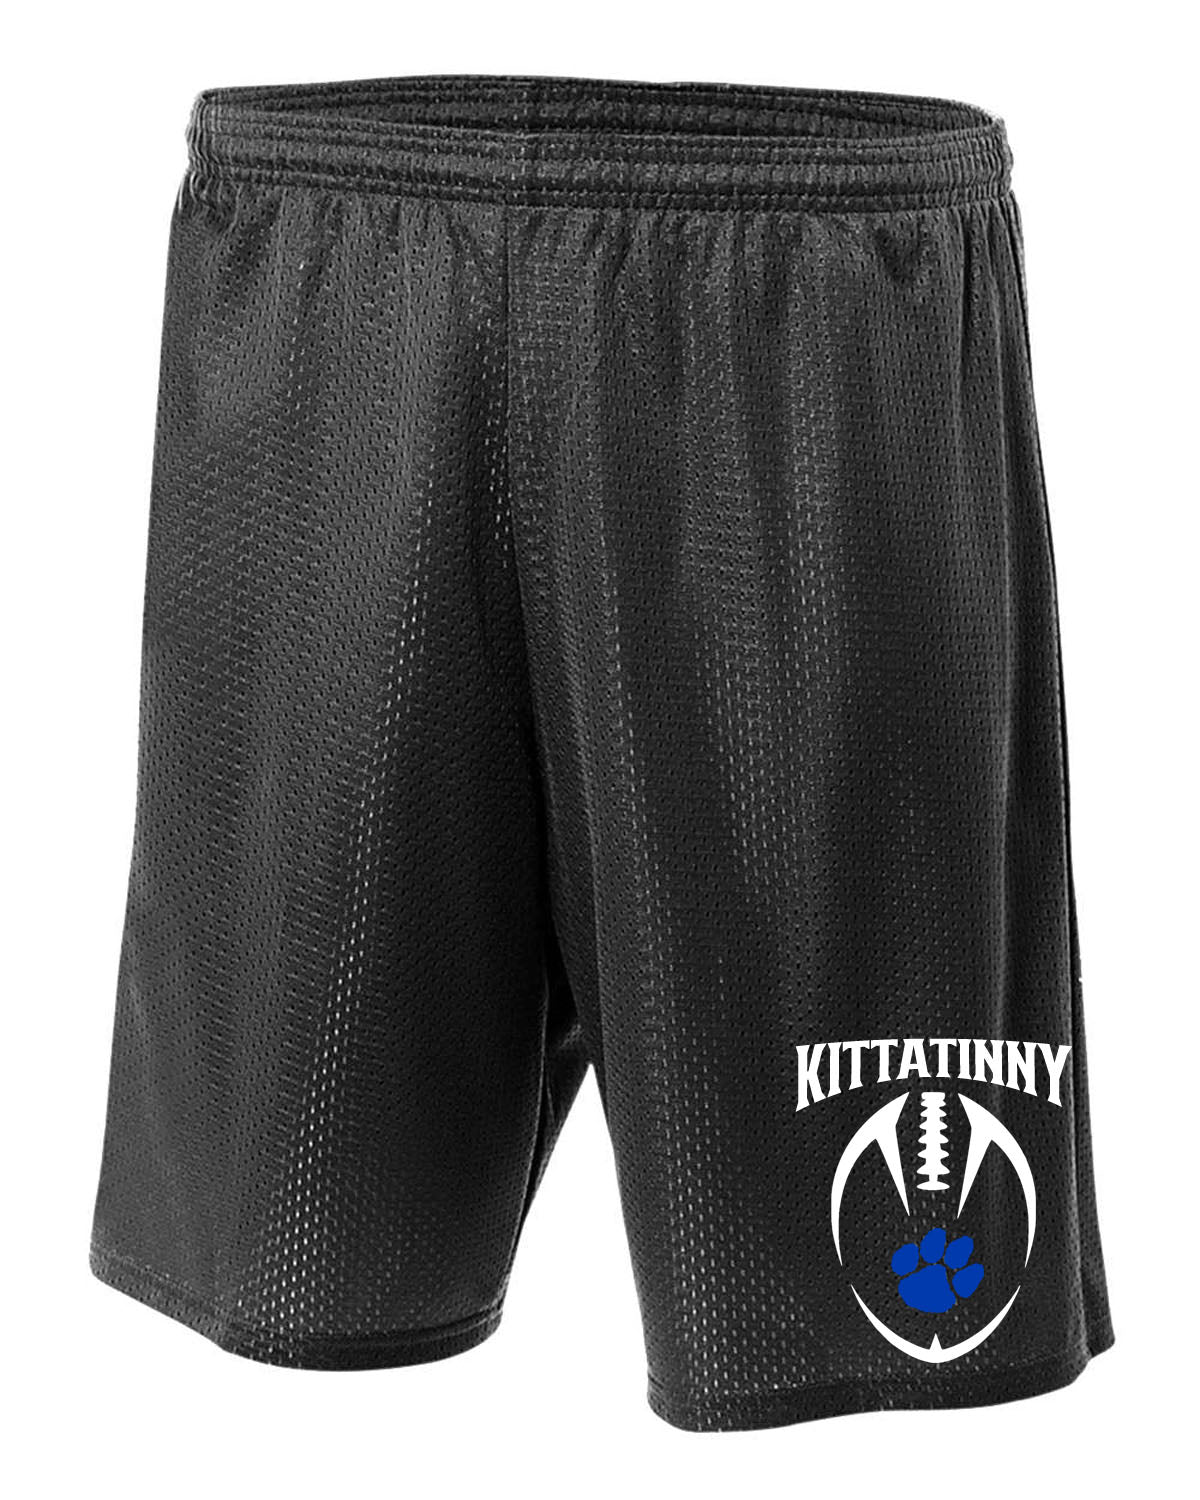 Kittatinny Football Design 8 Mesh Shorts